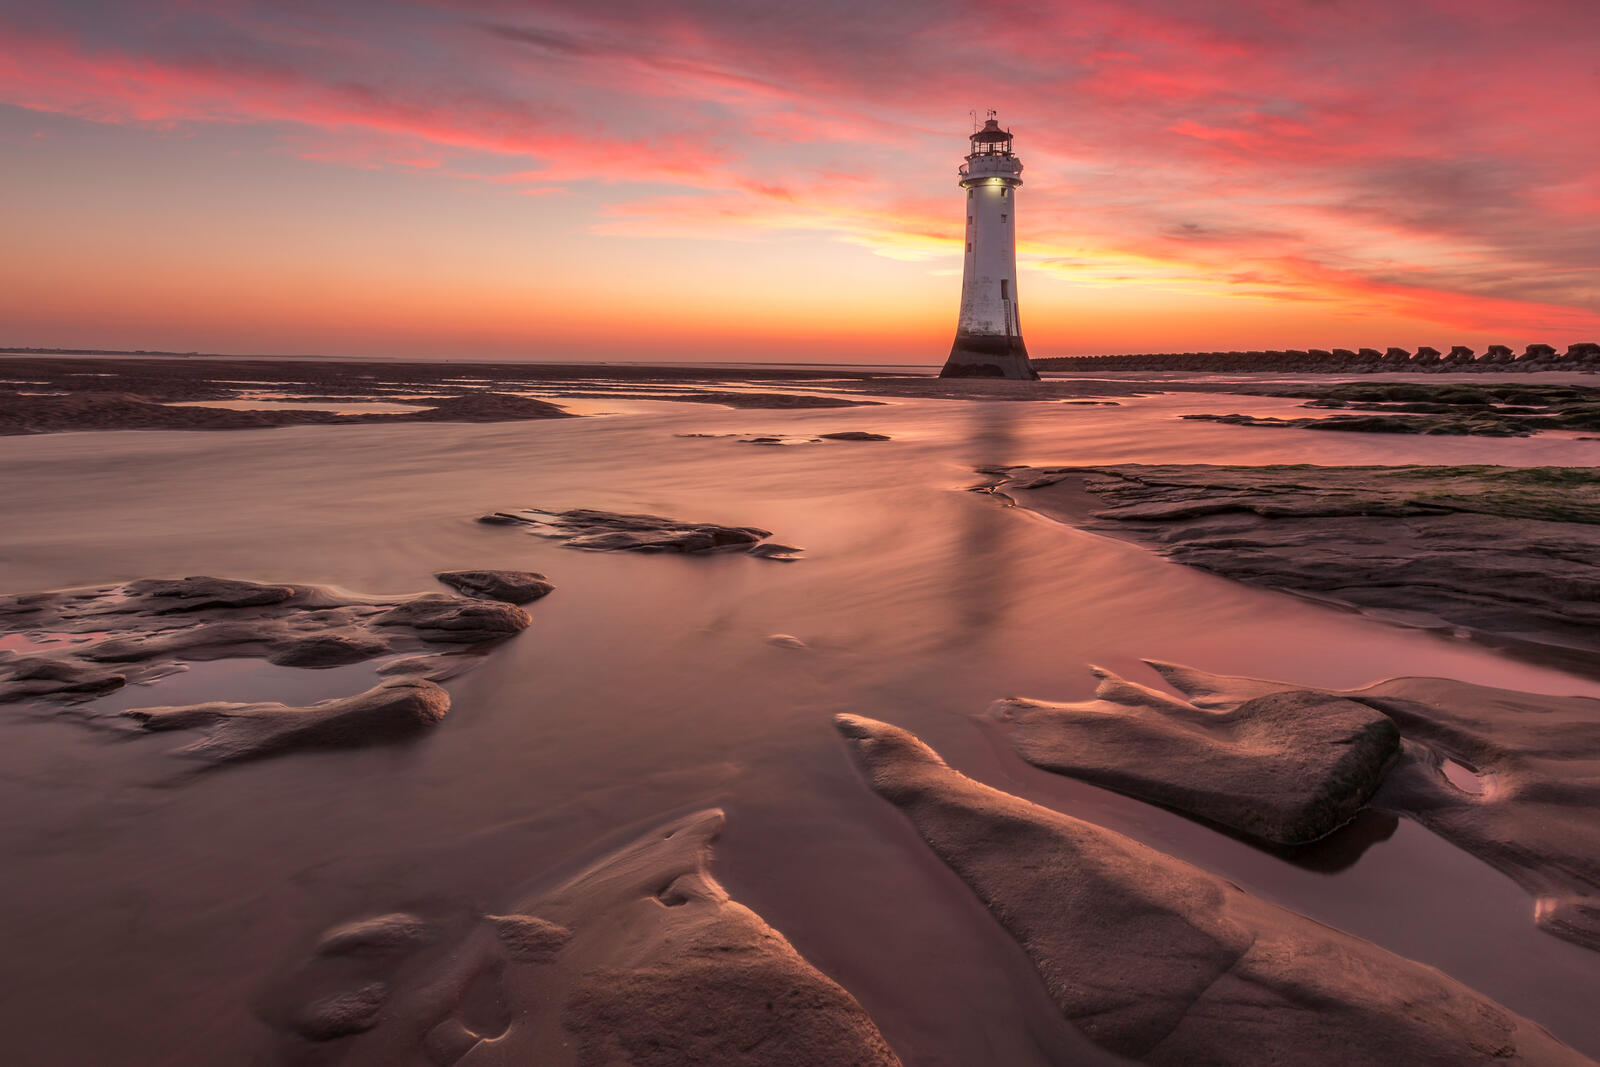 Бесплатное фото Свет маяка и вечернее море